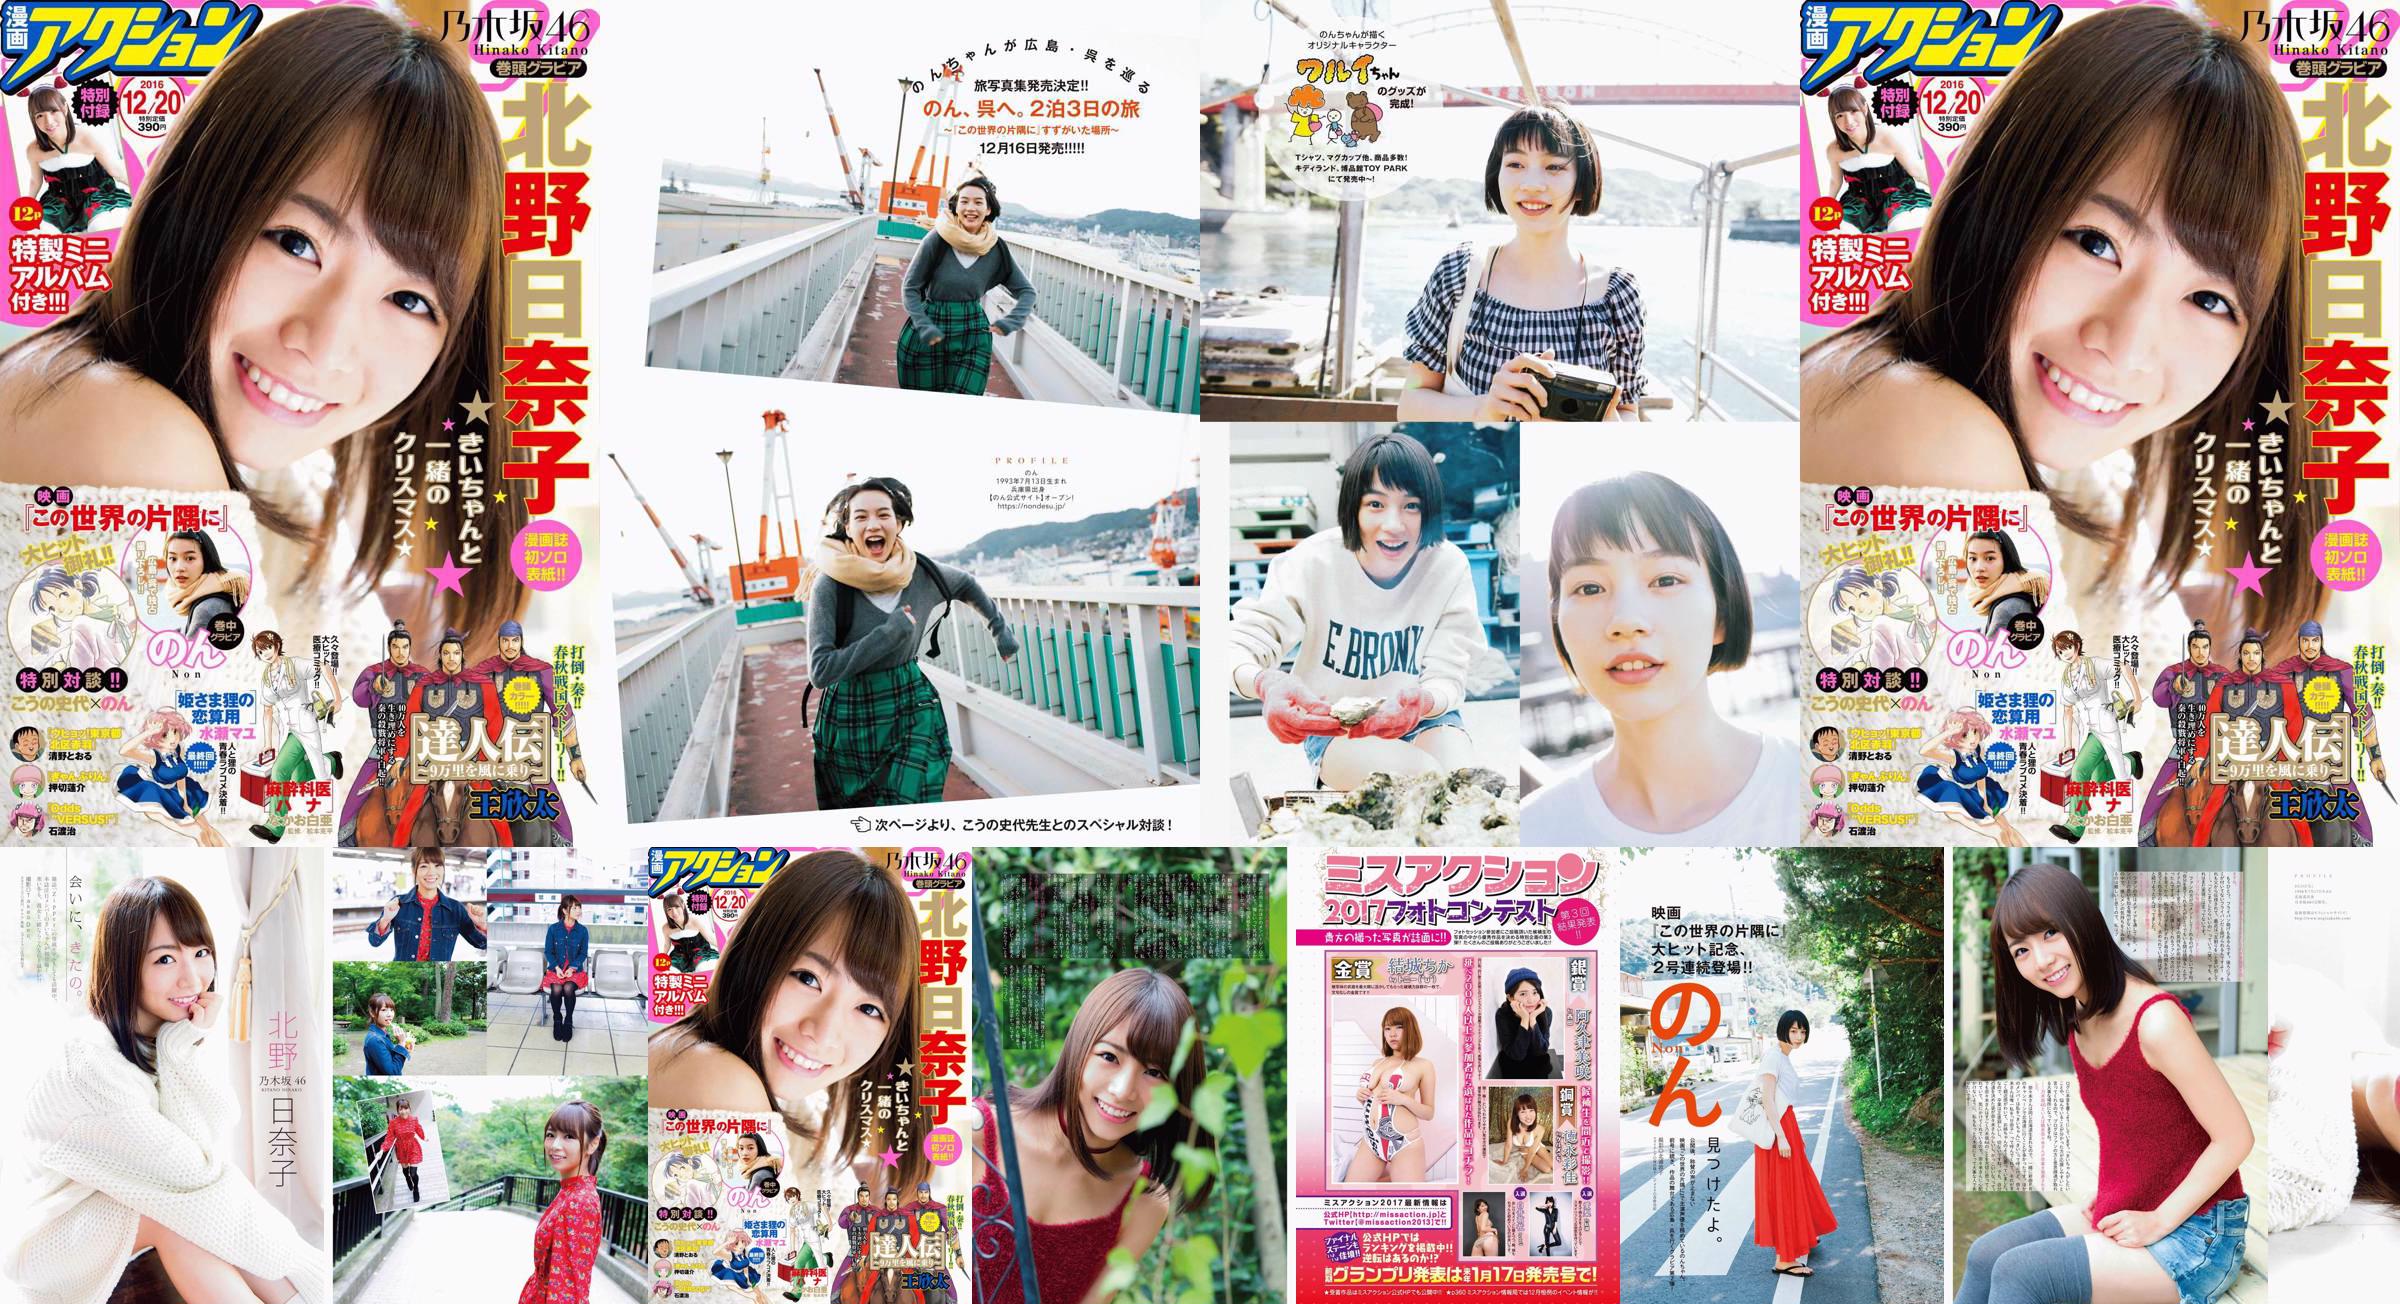 [Manga Action] Kitano Hinako のん 2016 No.24 Photo Magazine No.6afab2 Page 1